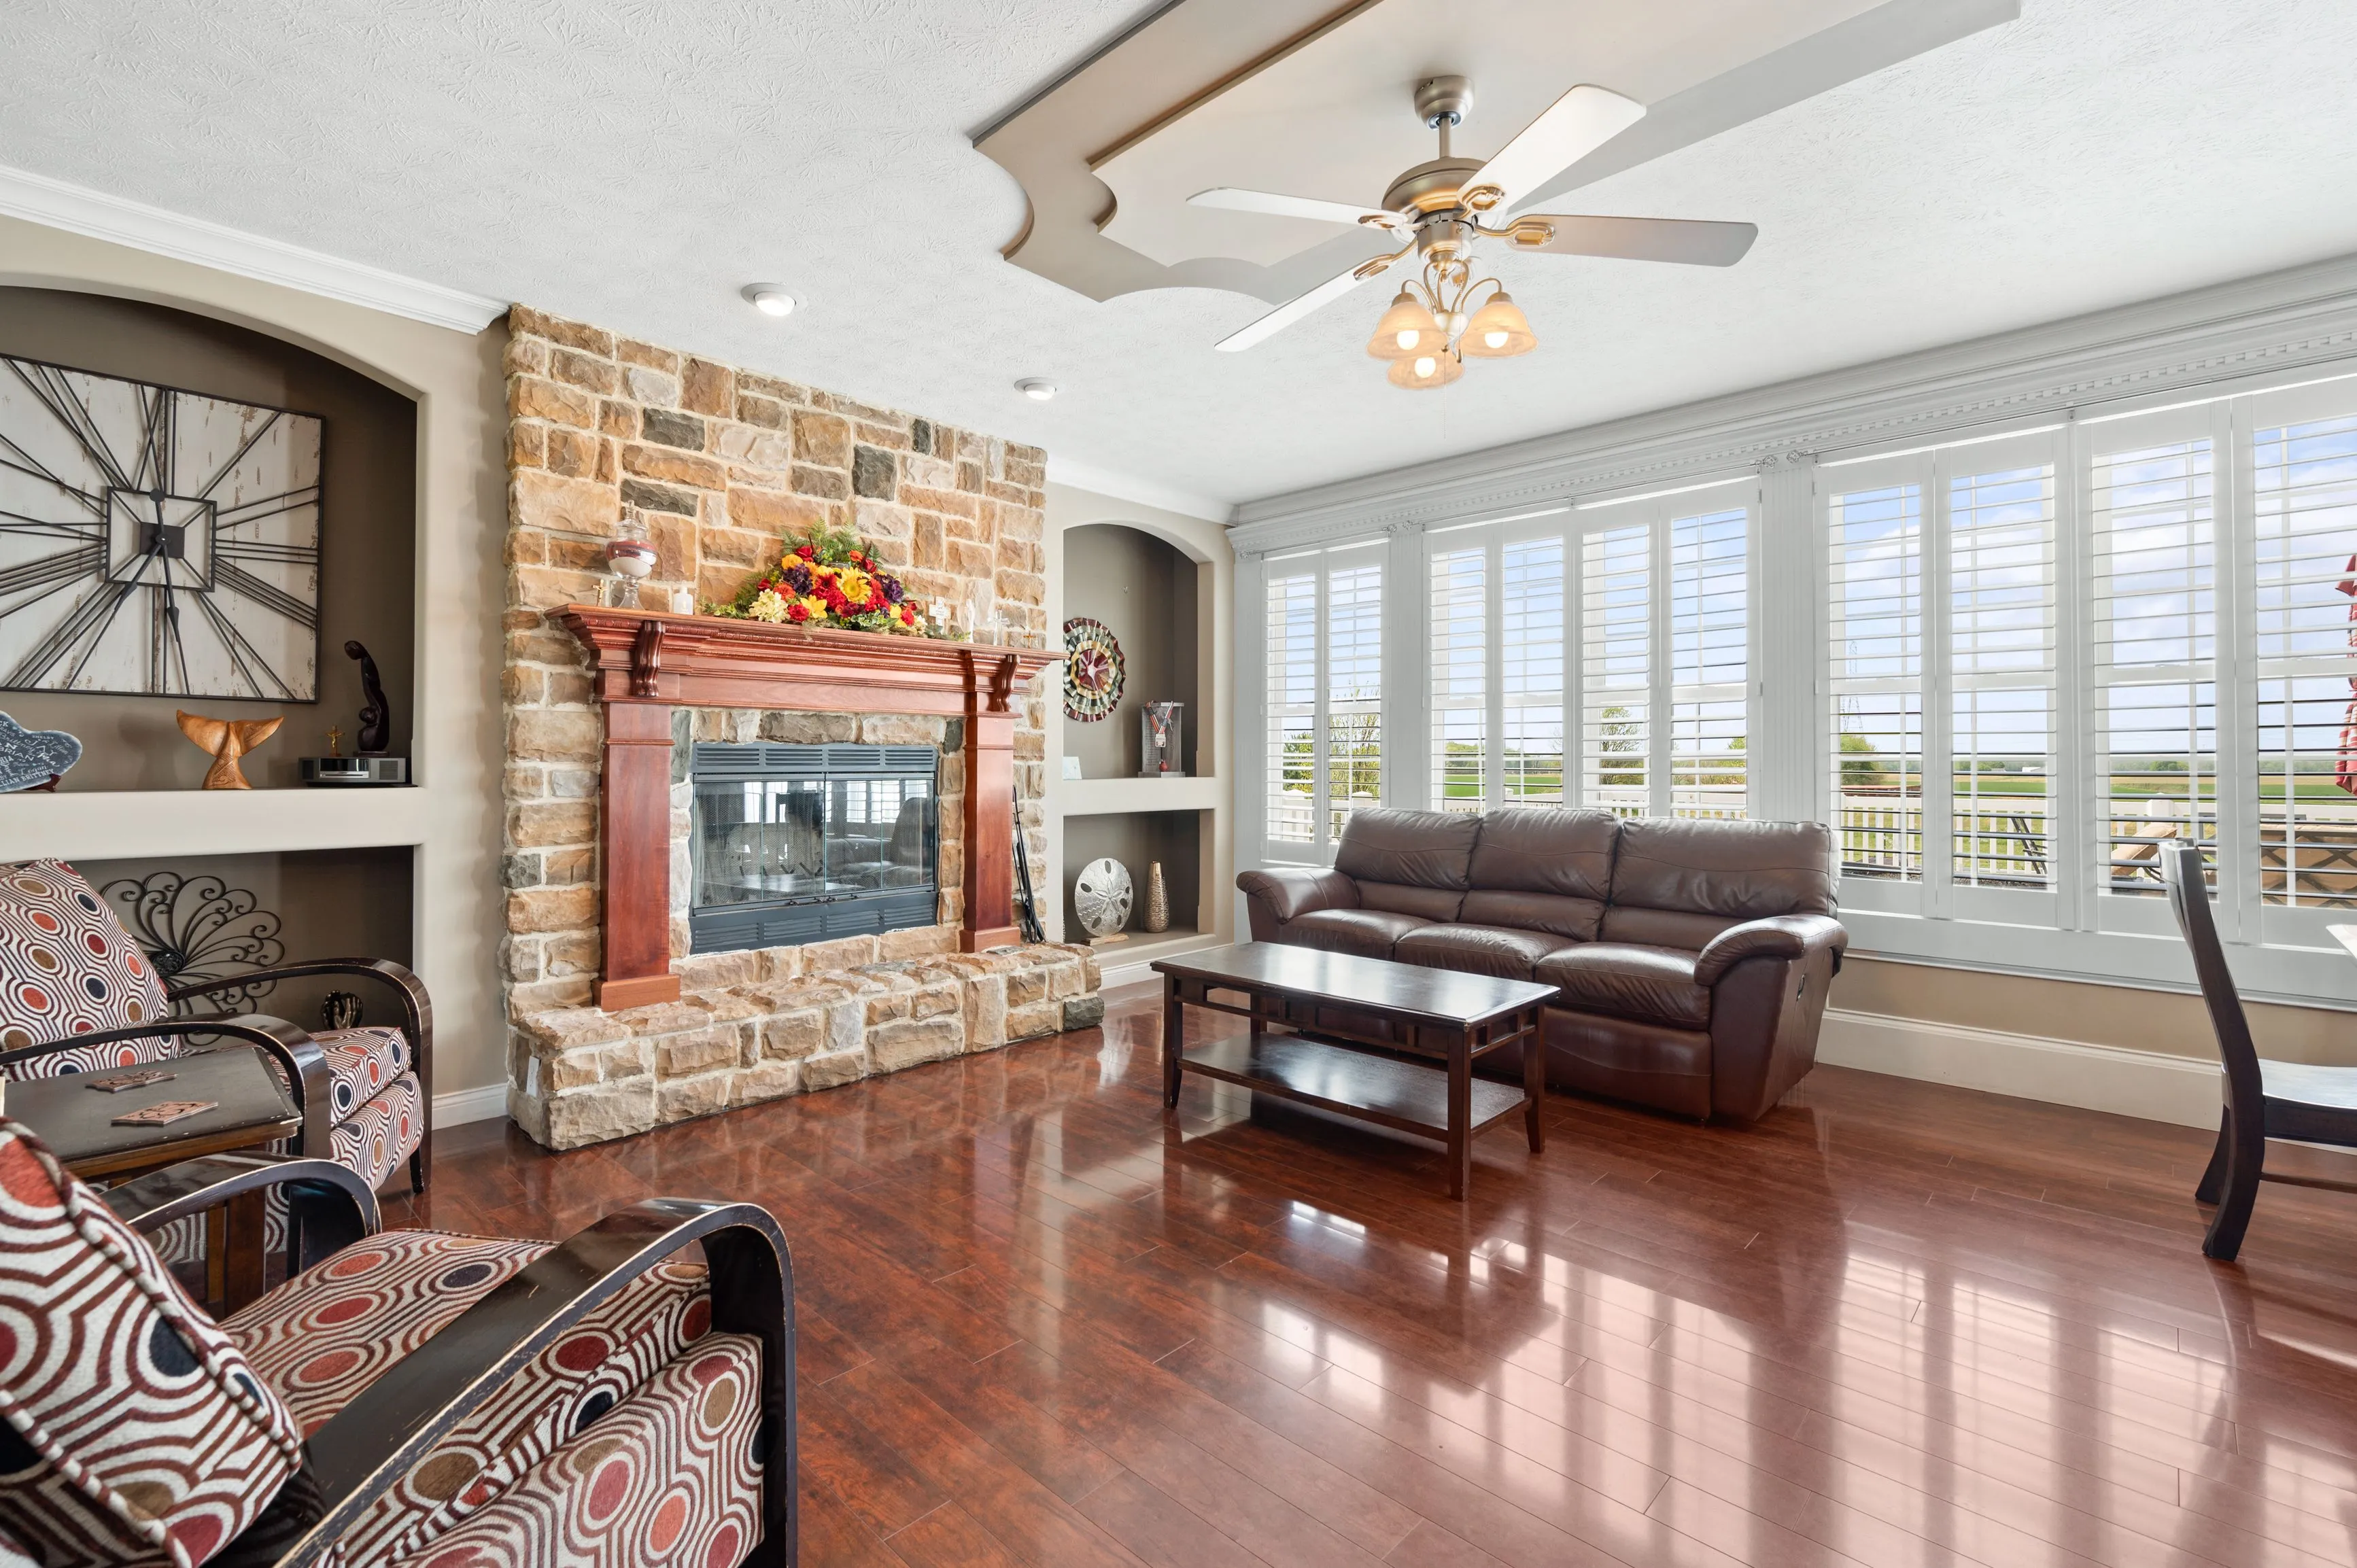 Elegant living room interior with polished hardwood floors, brick fireplace, large windows, and plush seating.